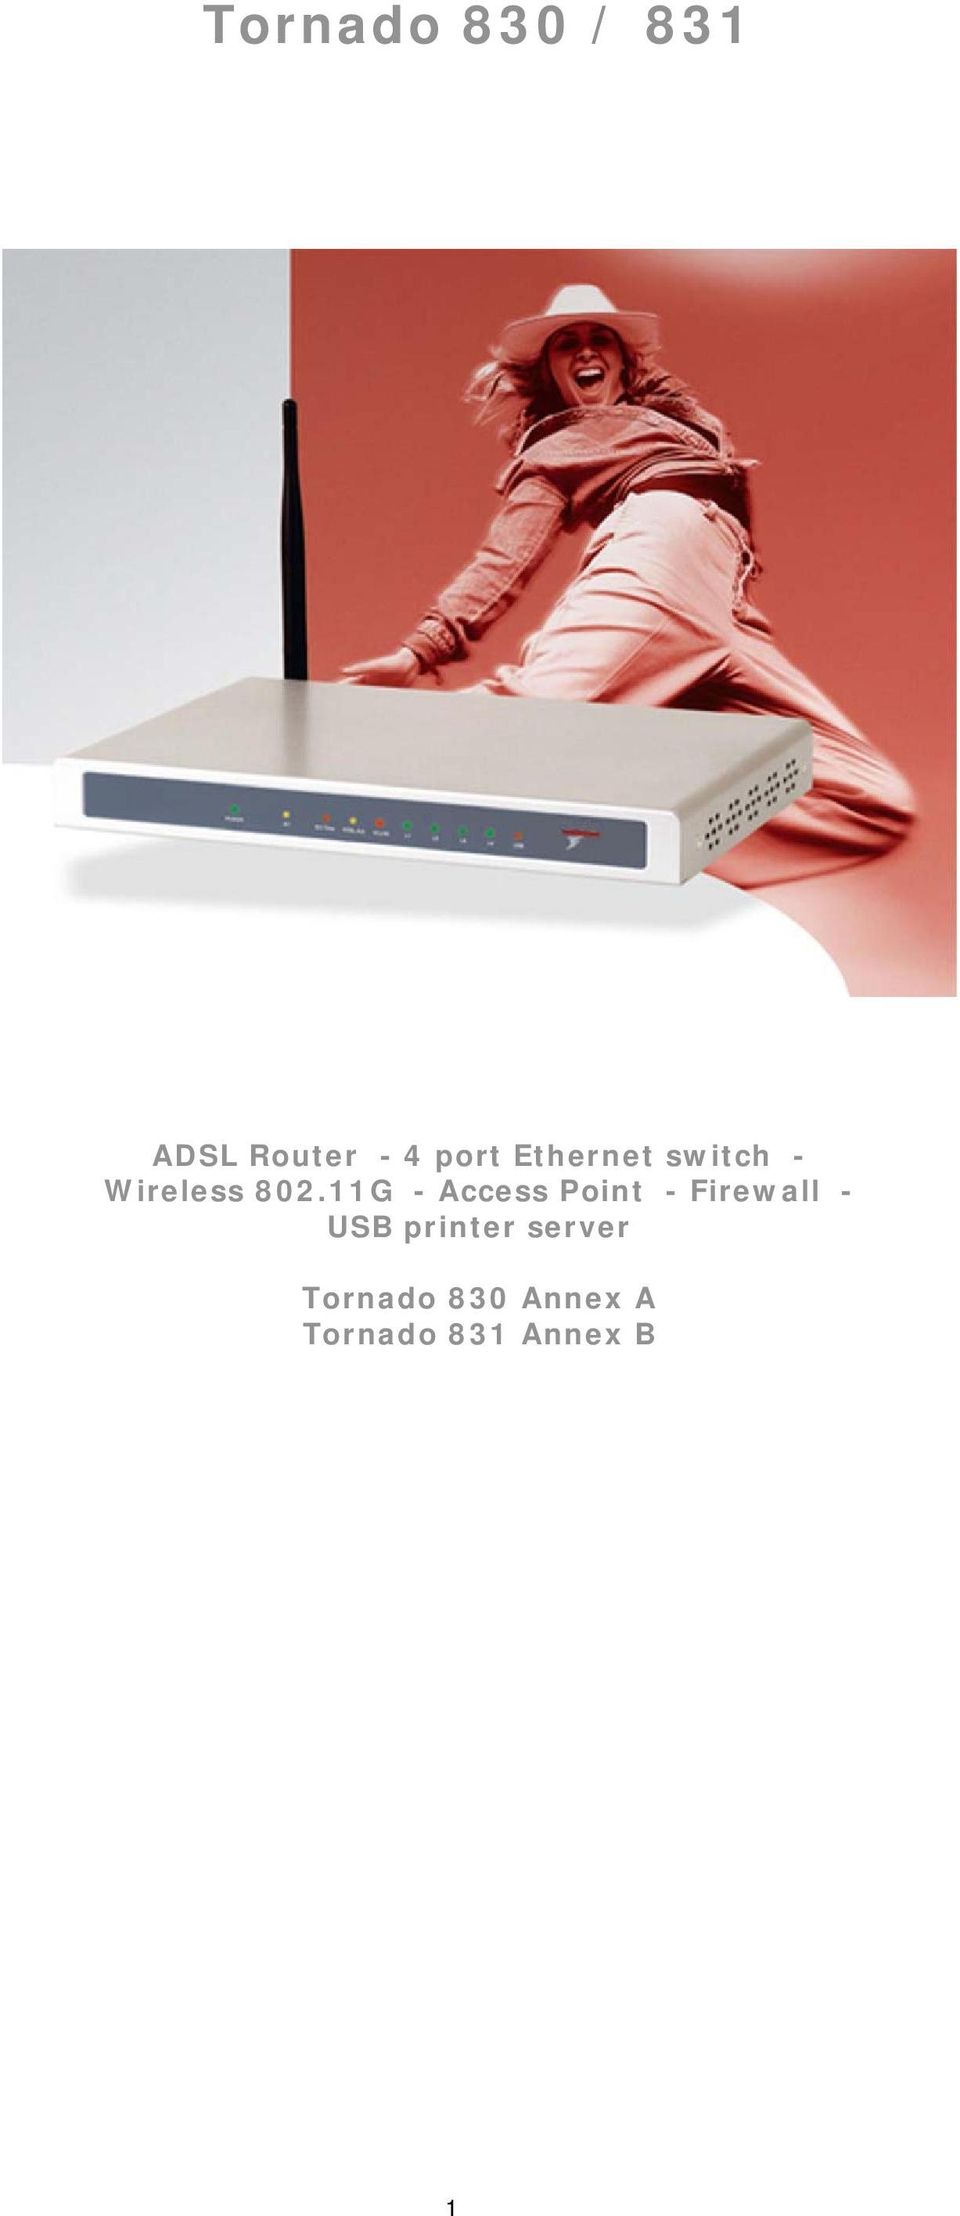 11G - Access Point - Firewall - USB